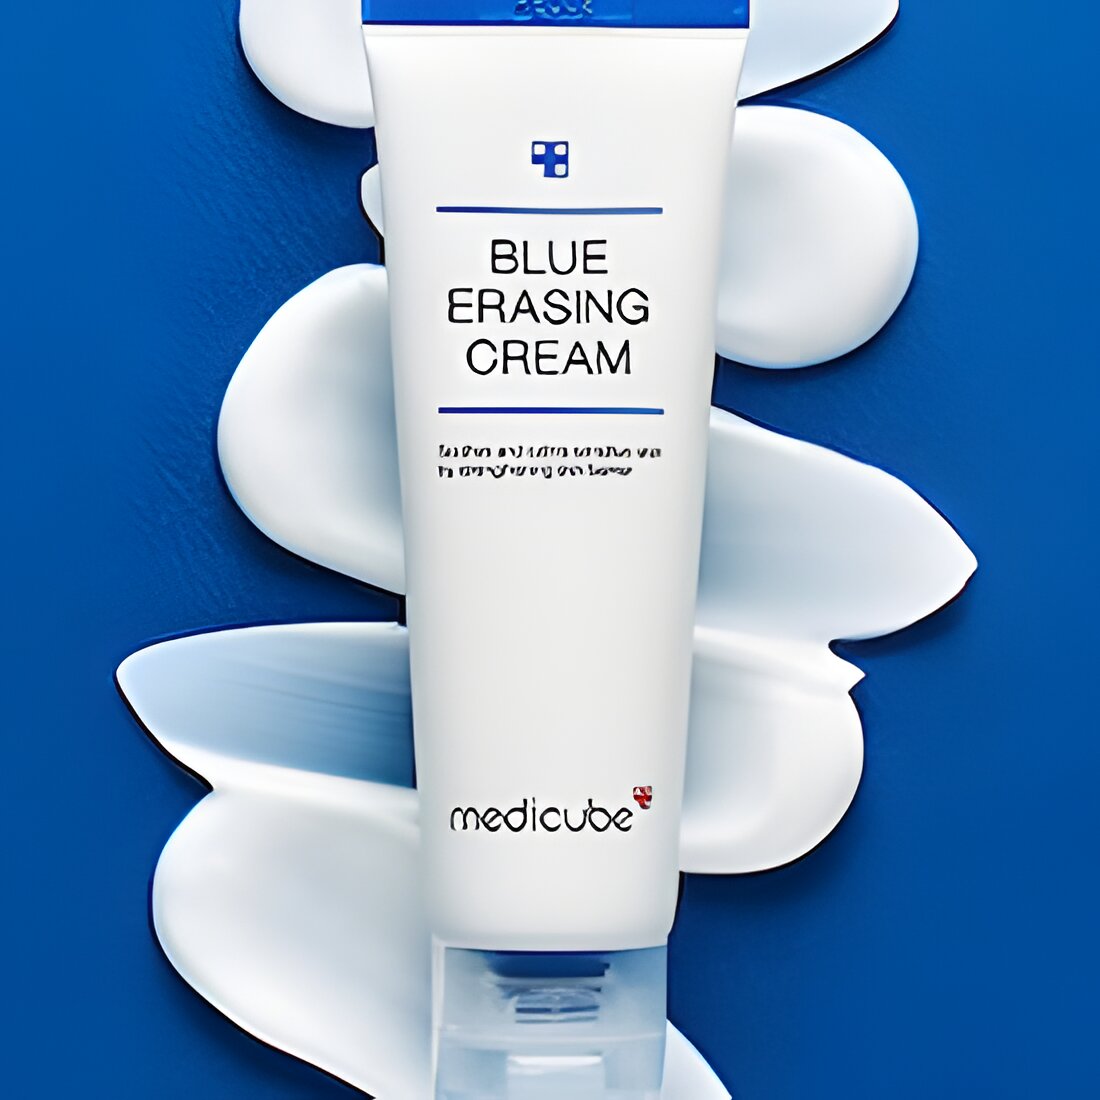 Free Blue Erasing Cream From Medicube